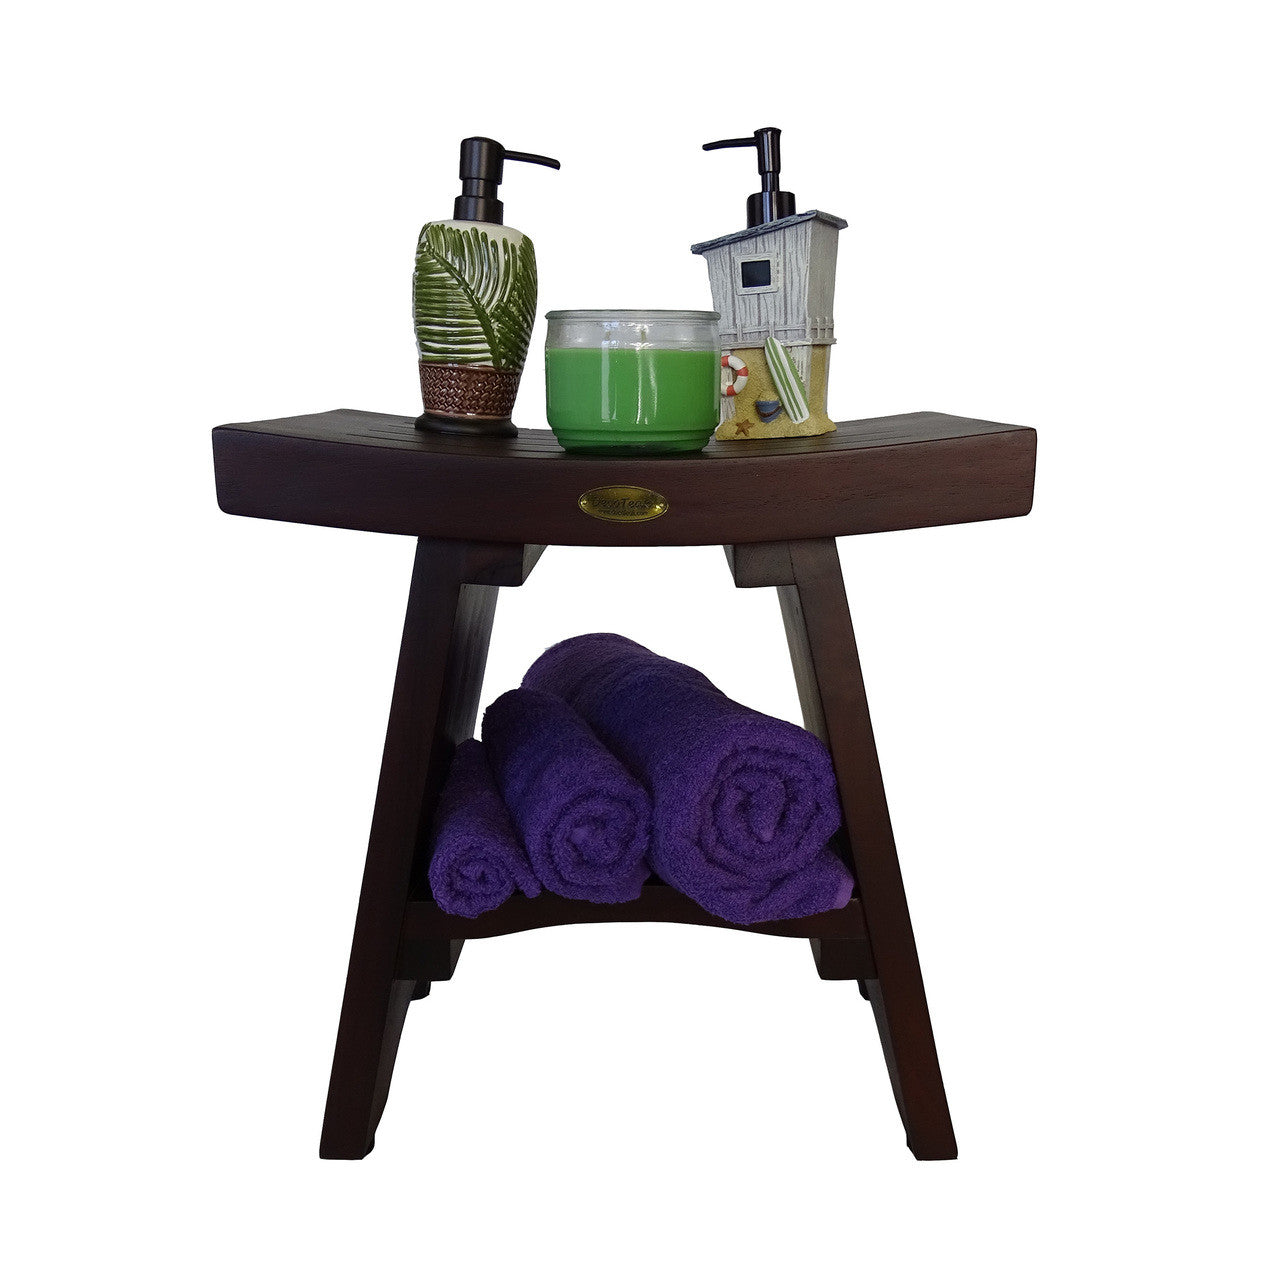 DecoTeak® Serenity® 18" Teak Wood Shower Bench with Shelf in Woodland Brown Finish